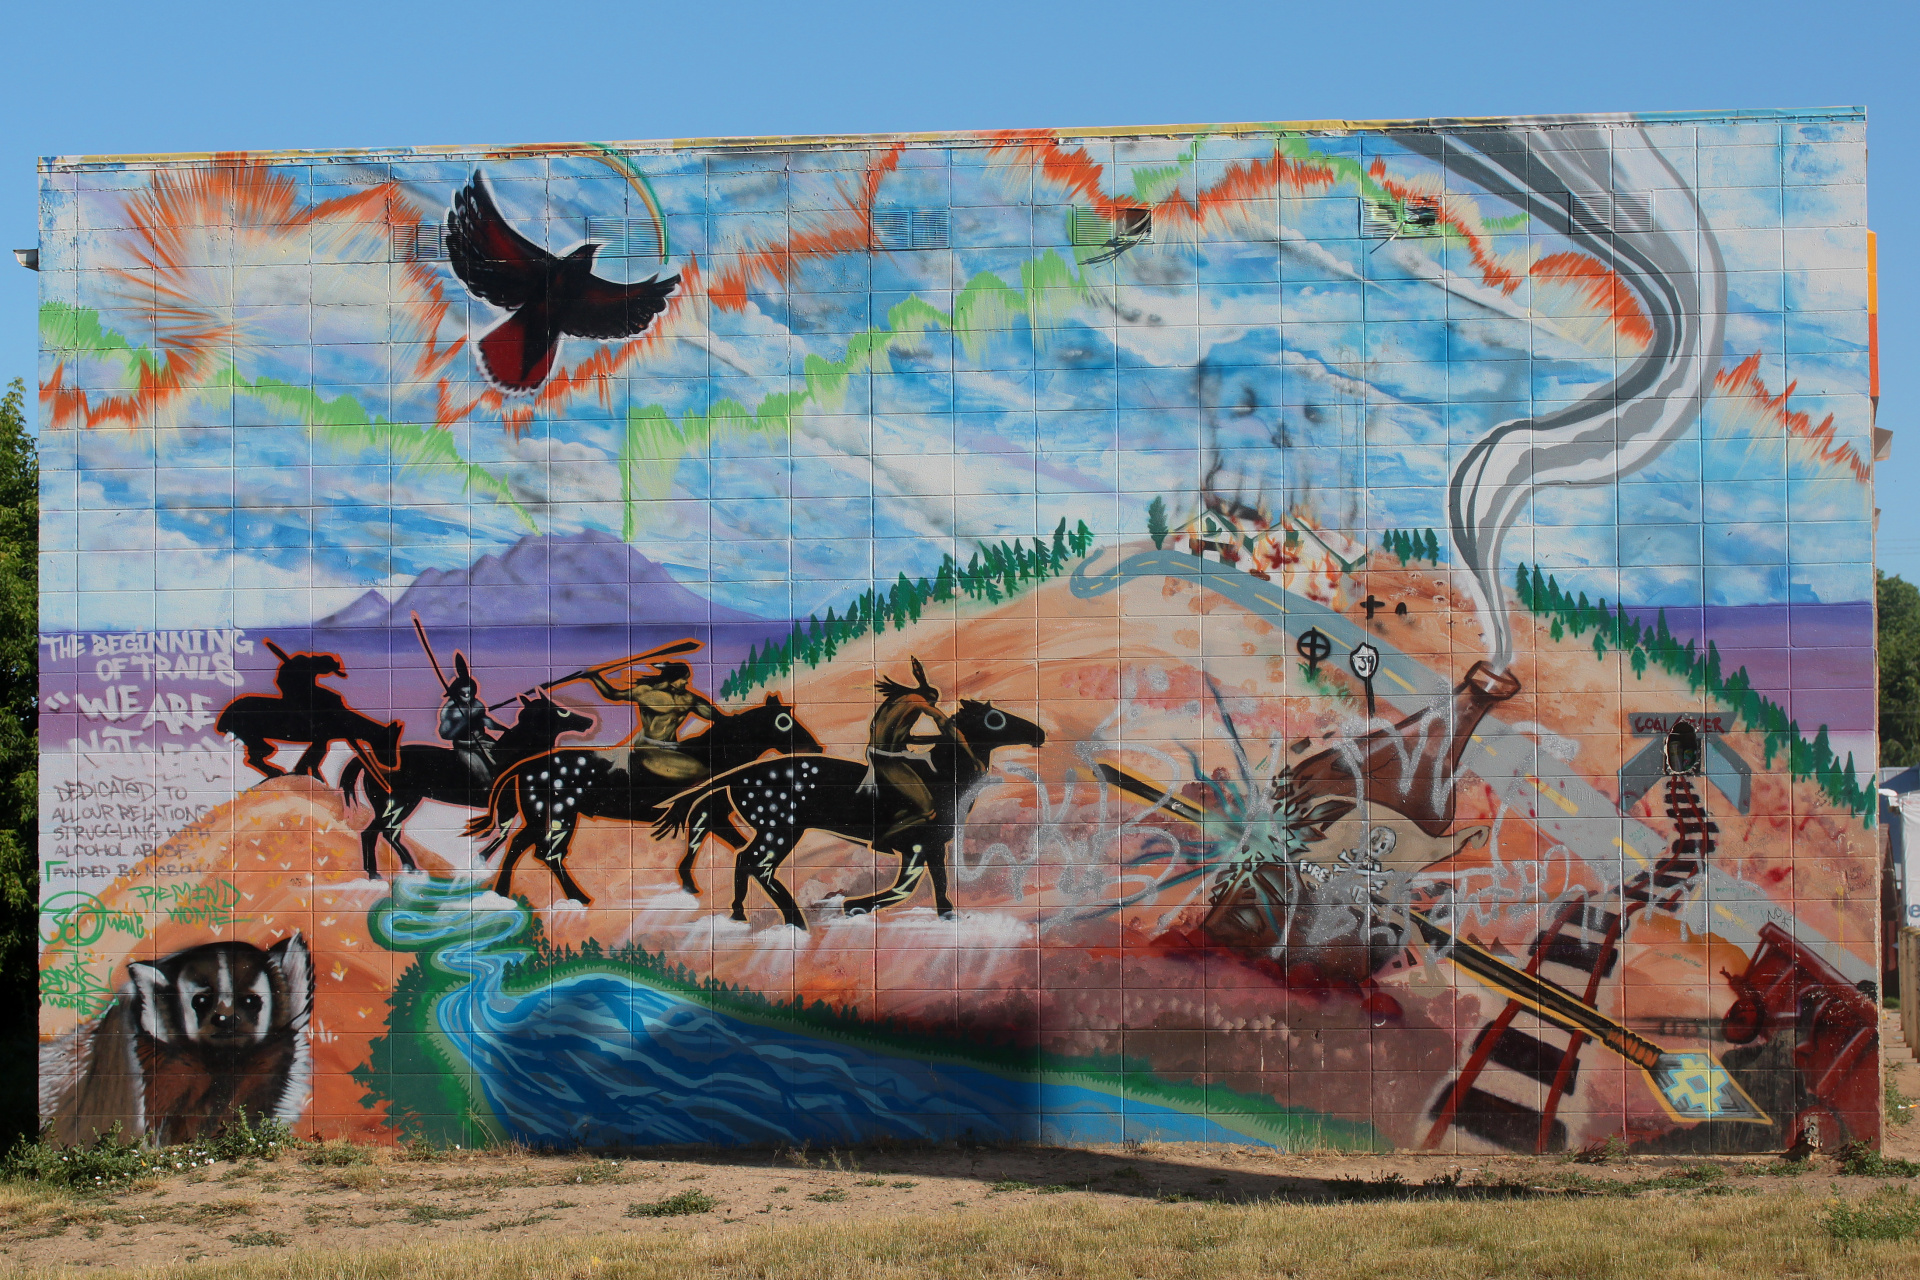 "The Beginning of Trails" Graffiti (Podróże » USA: Drogi nie obrane » Rezerwat » Lame Deer)